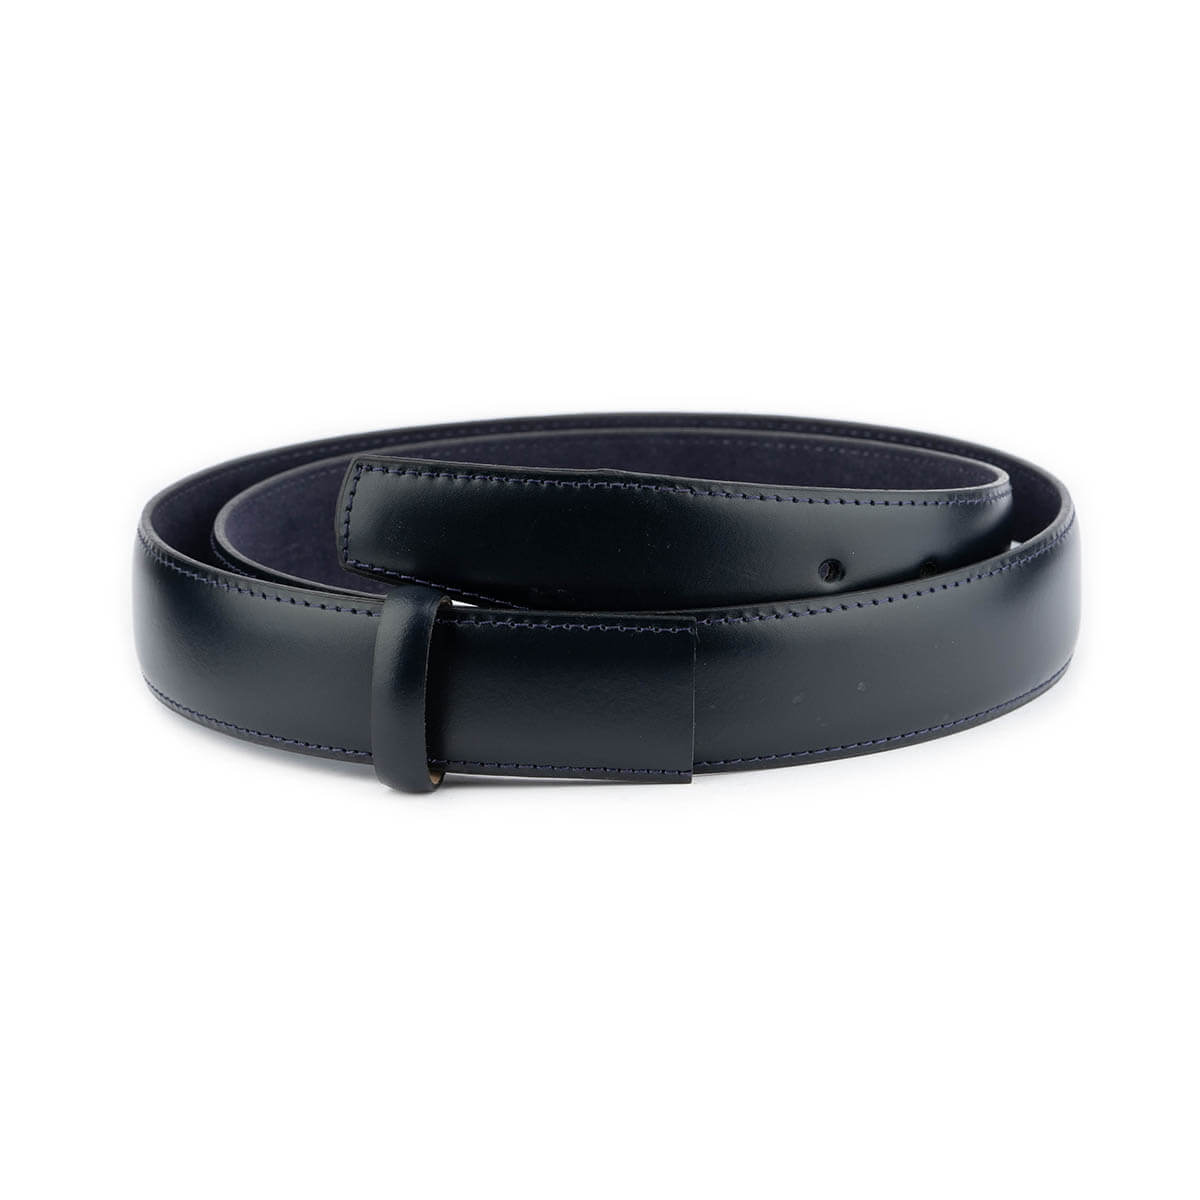 Buy Dark Blue Calf Leather Belt Strap Replacement - LeatherBeltsOnline.com